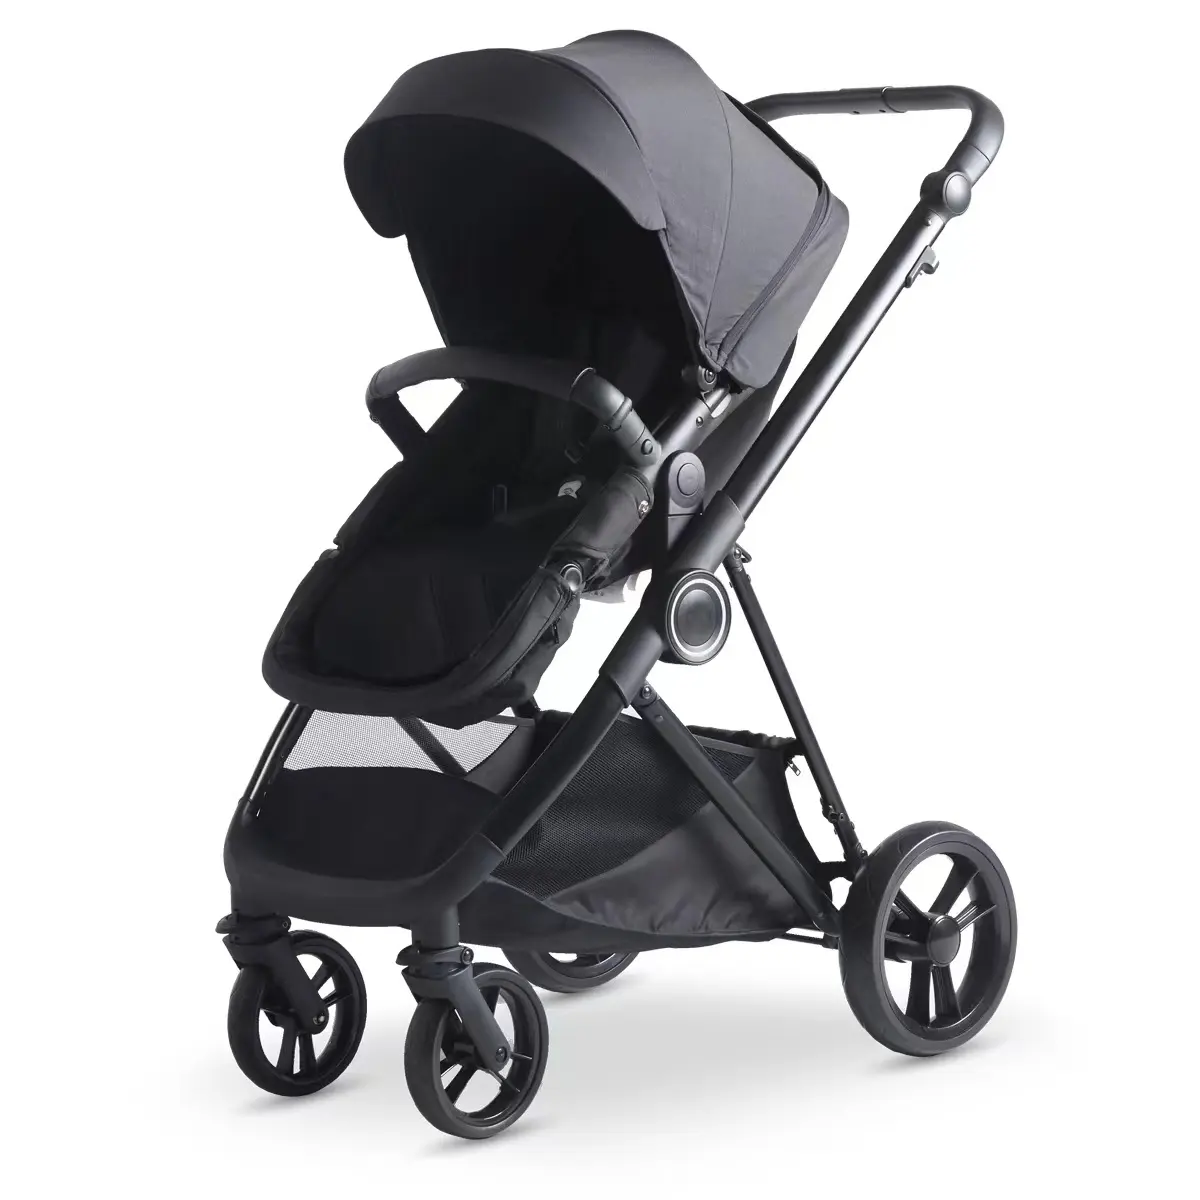 Brightbebe hot mom 3-in-1 multifunction travel system pram wholesale luxury baby stroller 3 in 1 pushchair